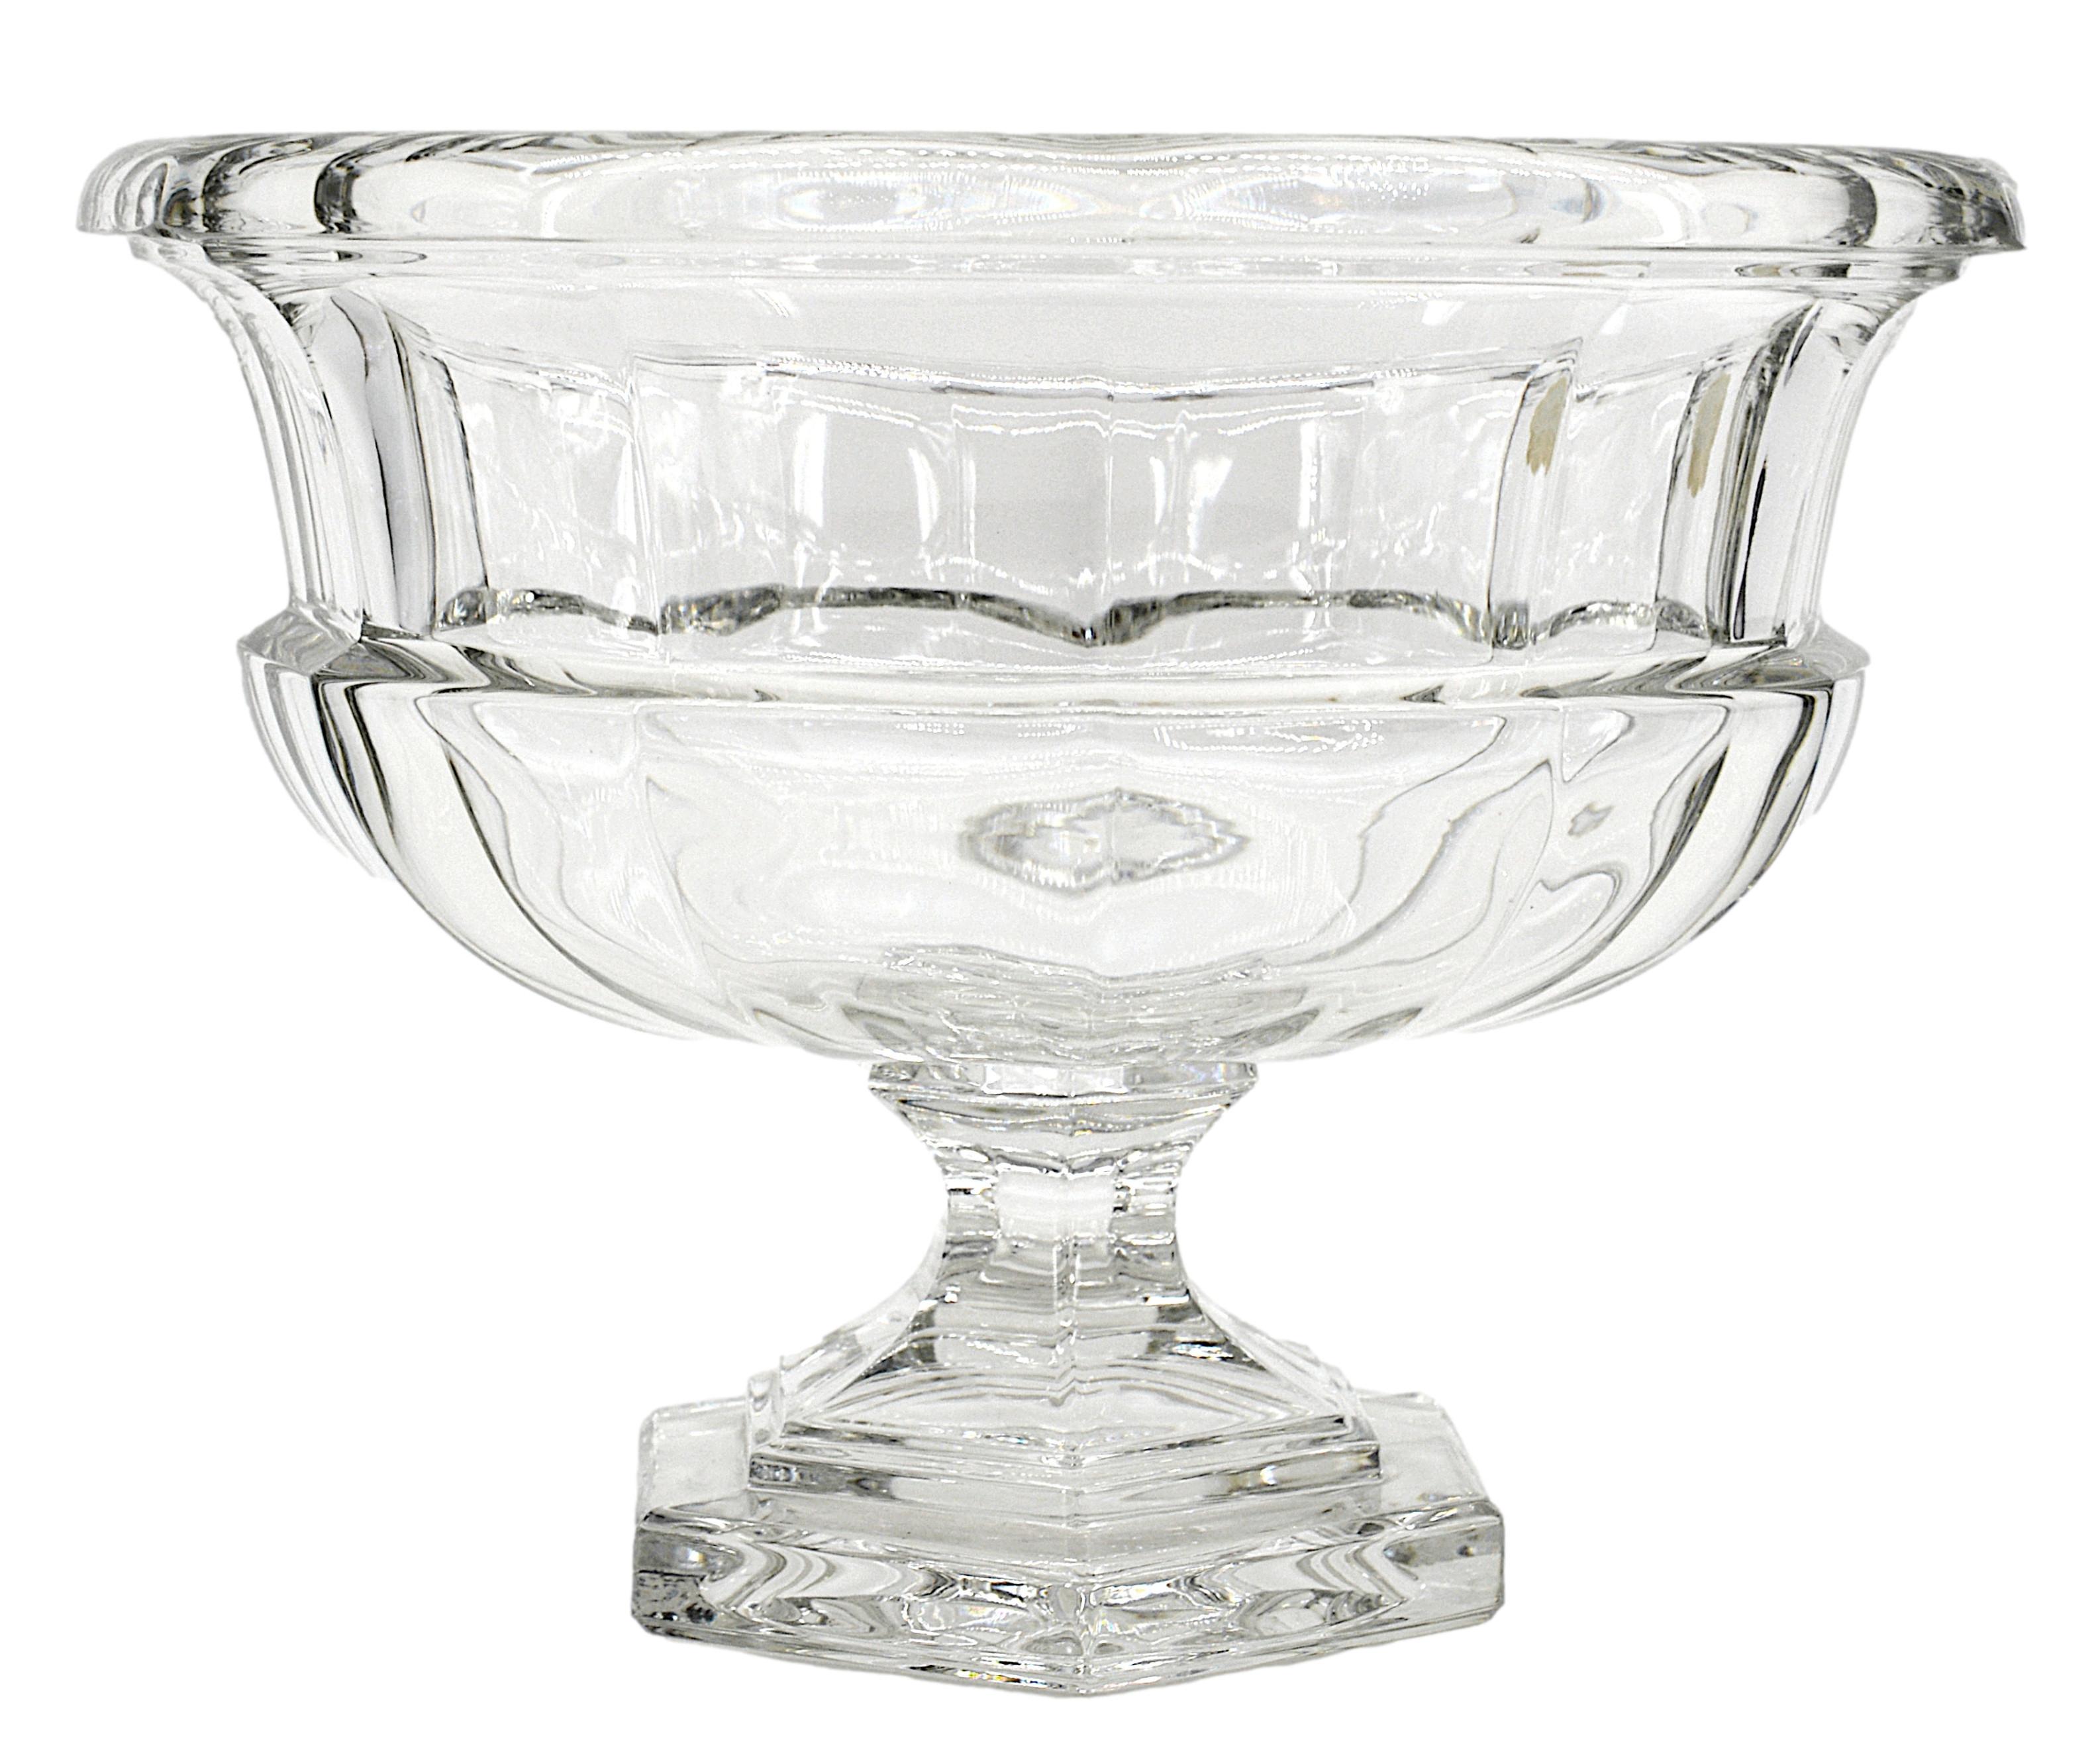 Mid-century fruit centerpiece by Cristalleries de Bavière, 1950s. Heavy & thick crystal - weight : 4kgs. Crystal pedestal bowl. Centerpiece or fruit bowl. Height: 7.5